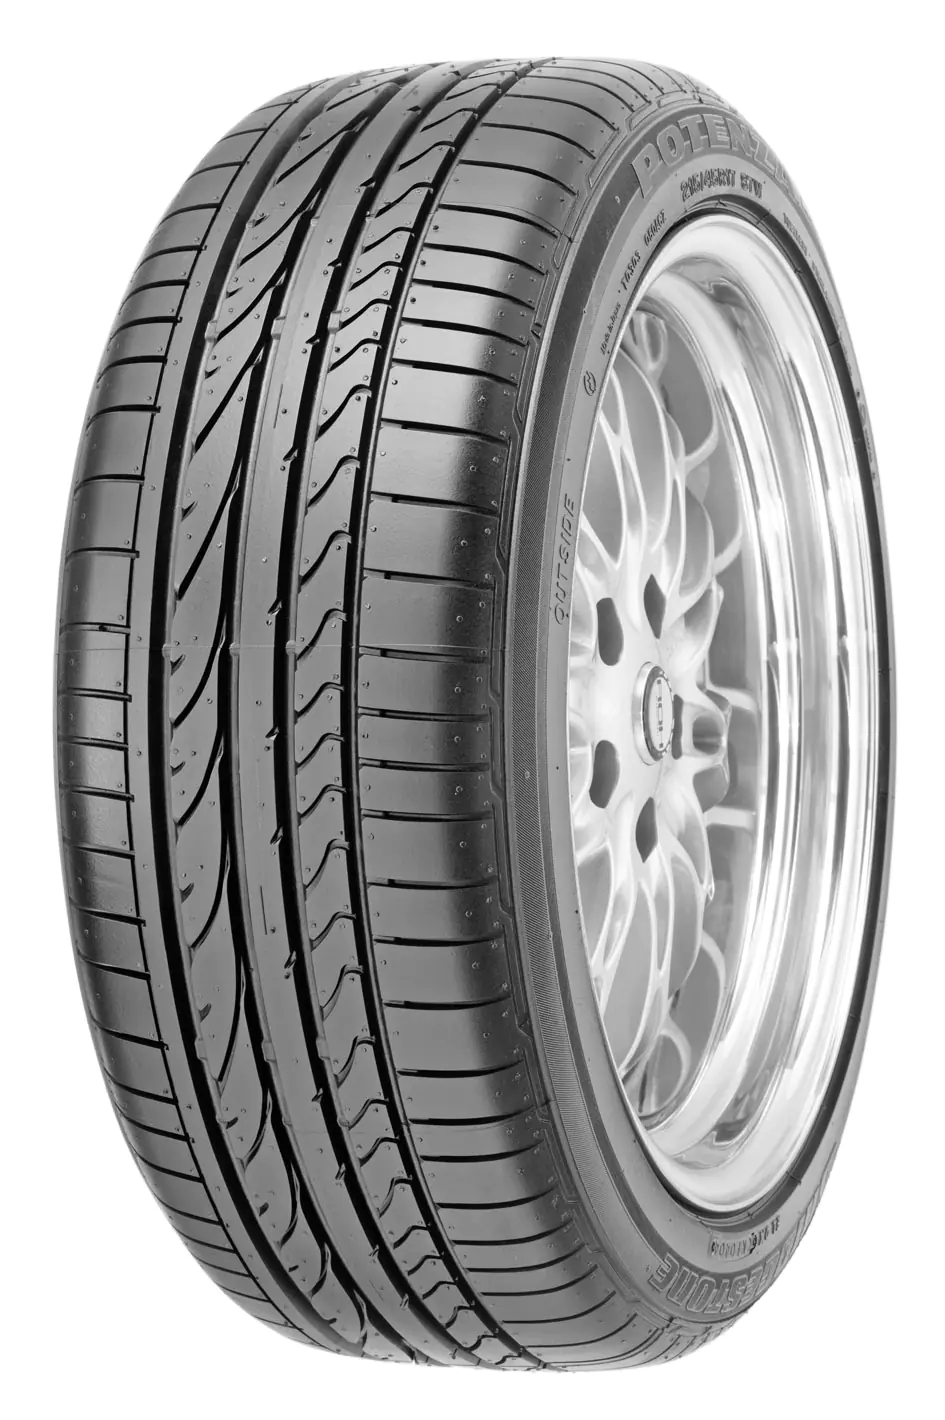 Bridgestone Bridgestone 245/45 R18 96Y Potenza RE050 MO pneumatici nuovi Estivo 